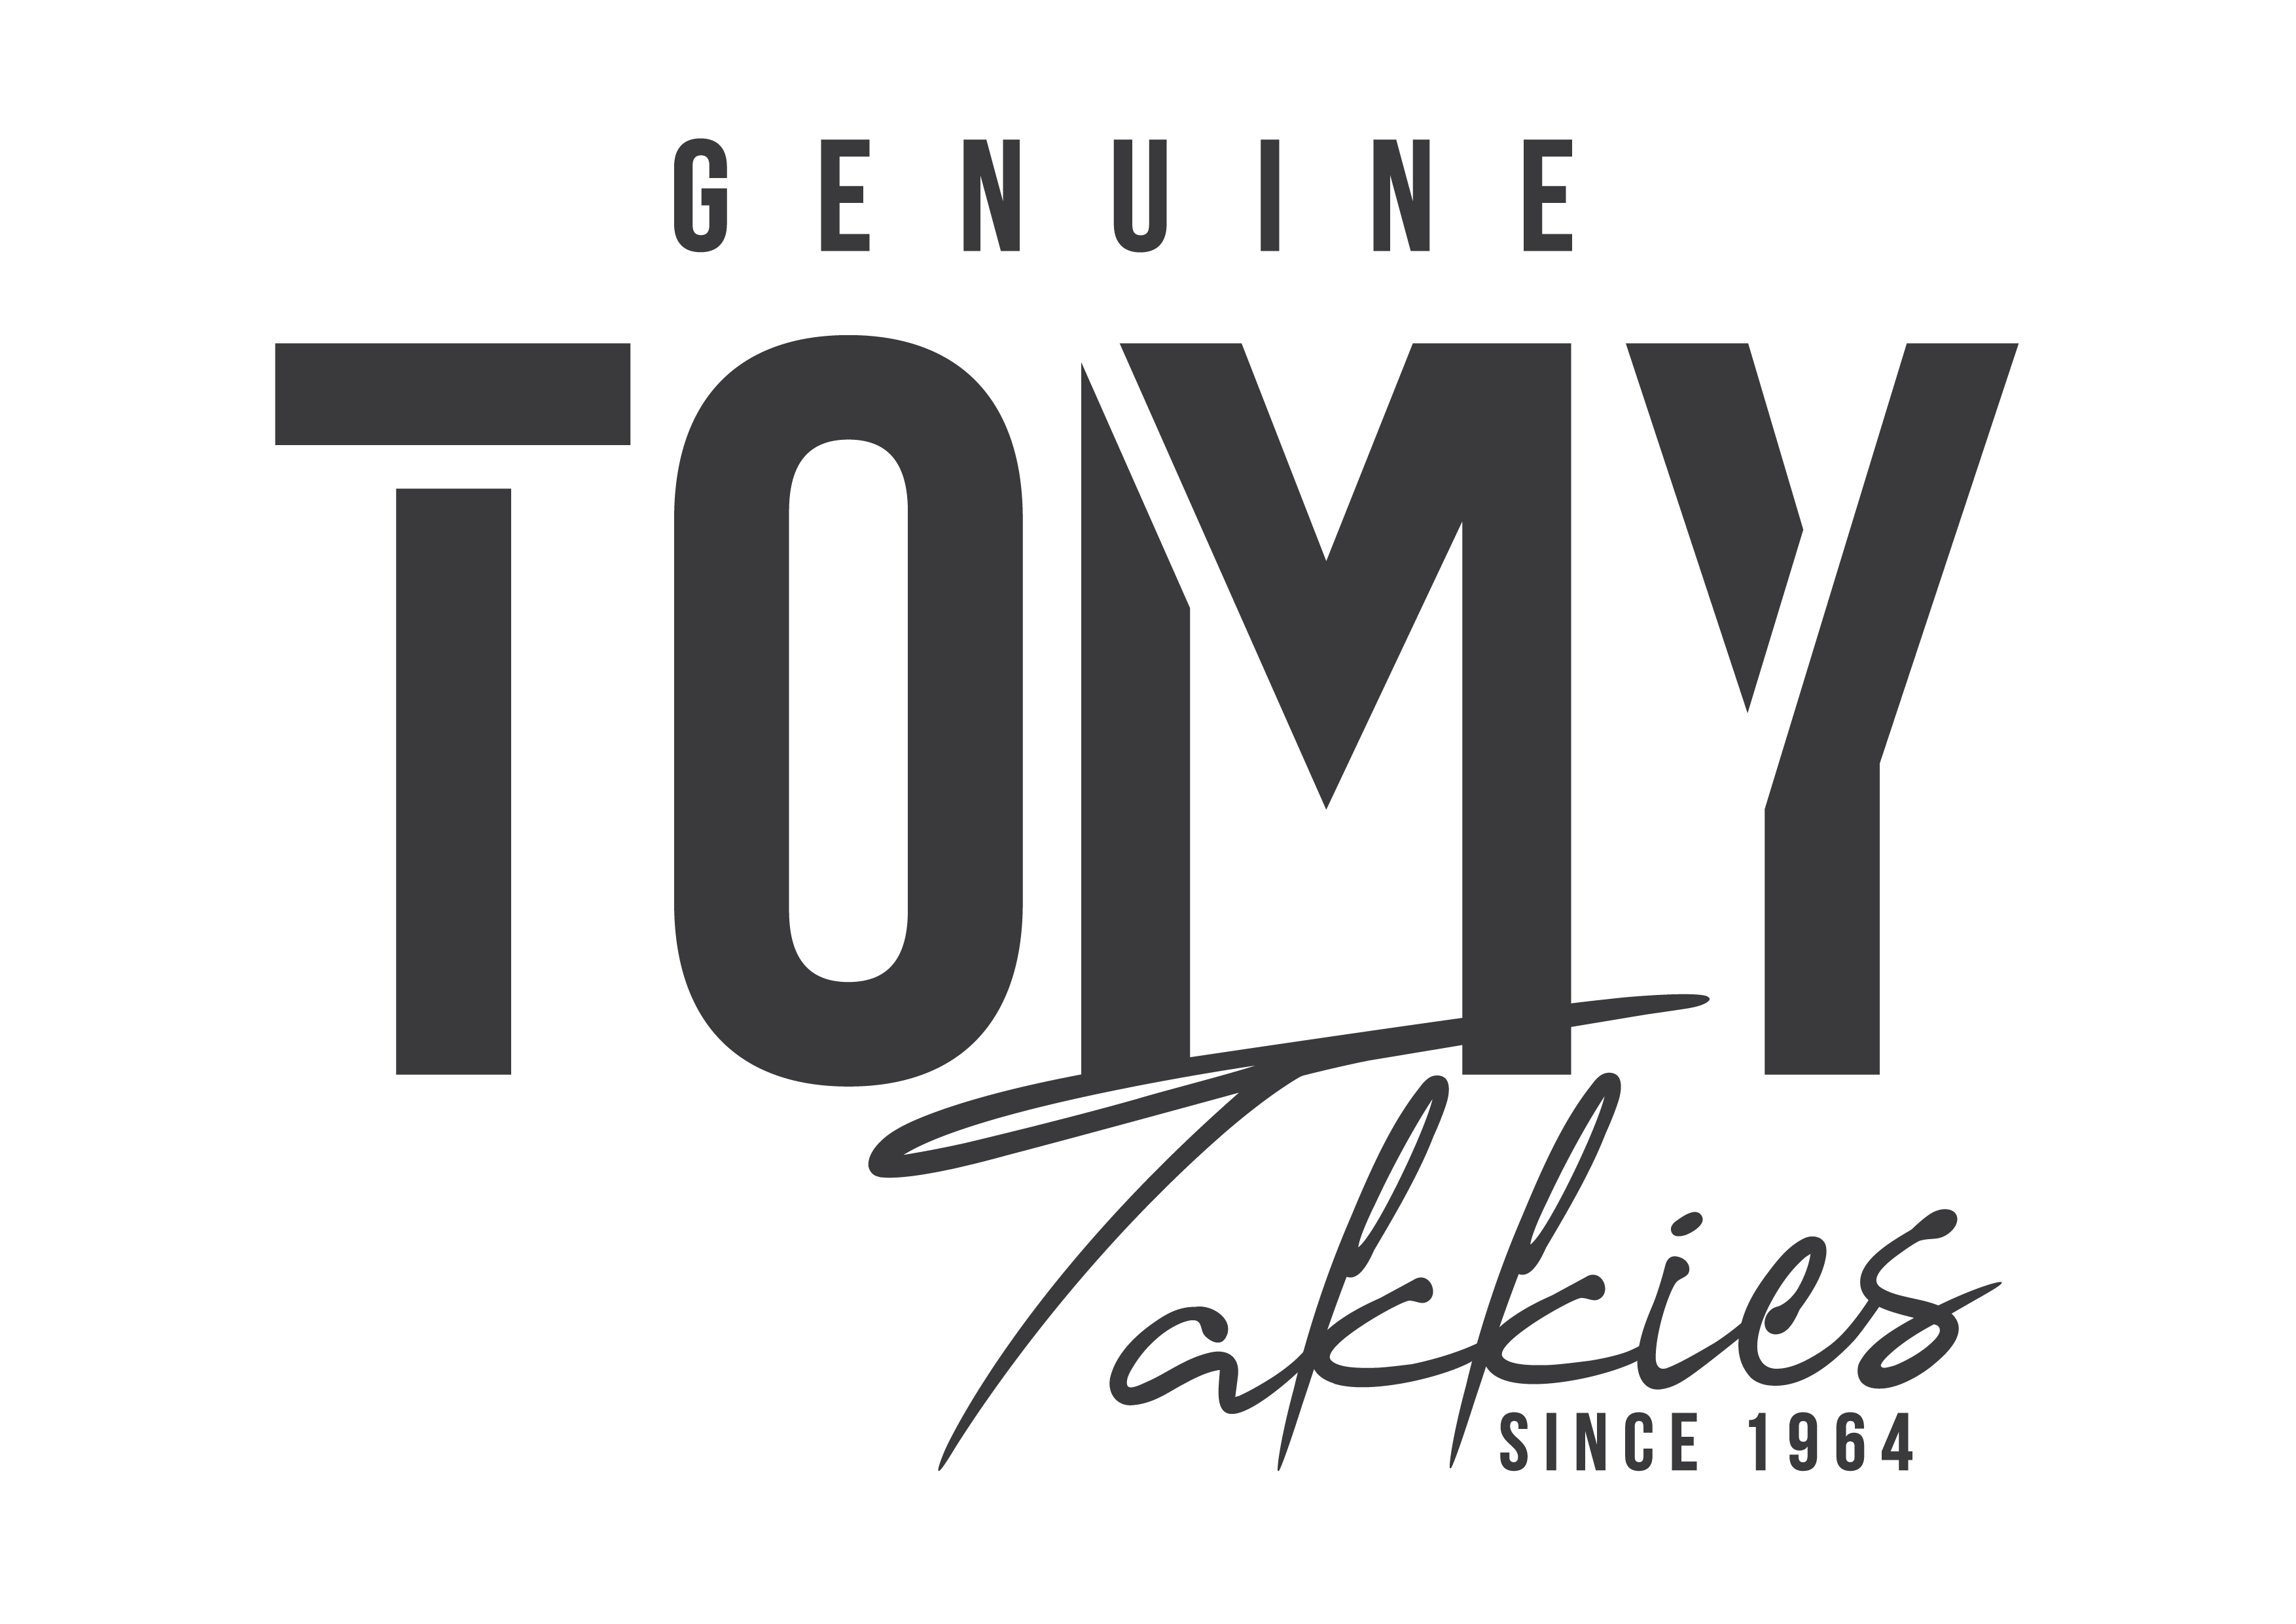 Tomy Takkies-Since 1964